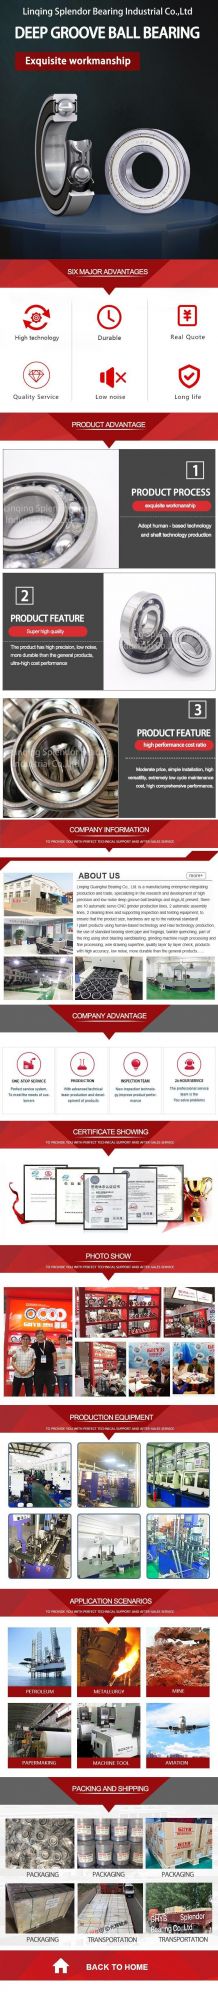 China Factory Distributor Supplier of Deep Groove Ball Bearings for Motors, Compressors, Alternators 6213-2rz/P6/Z2V2